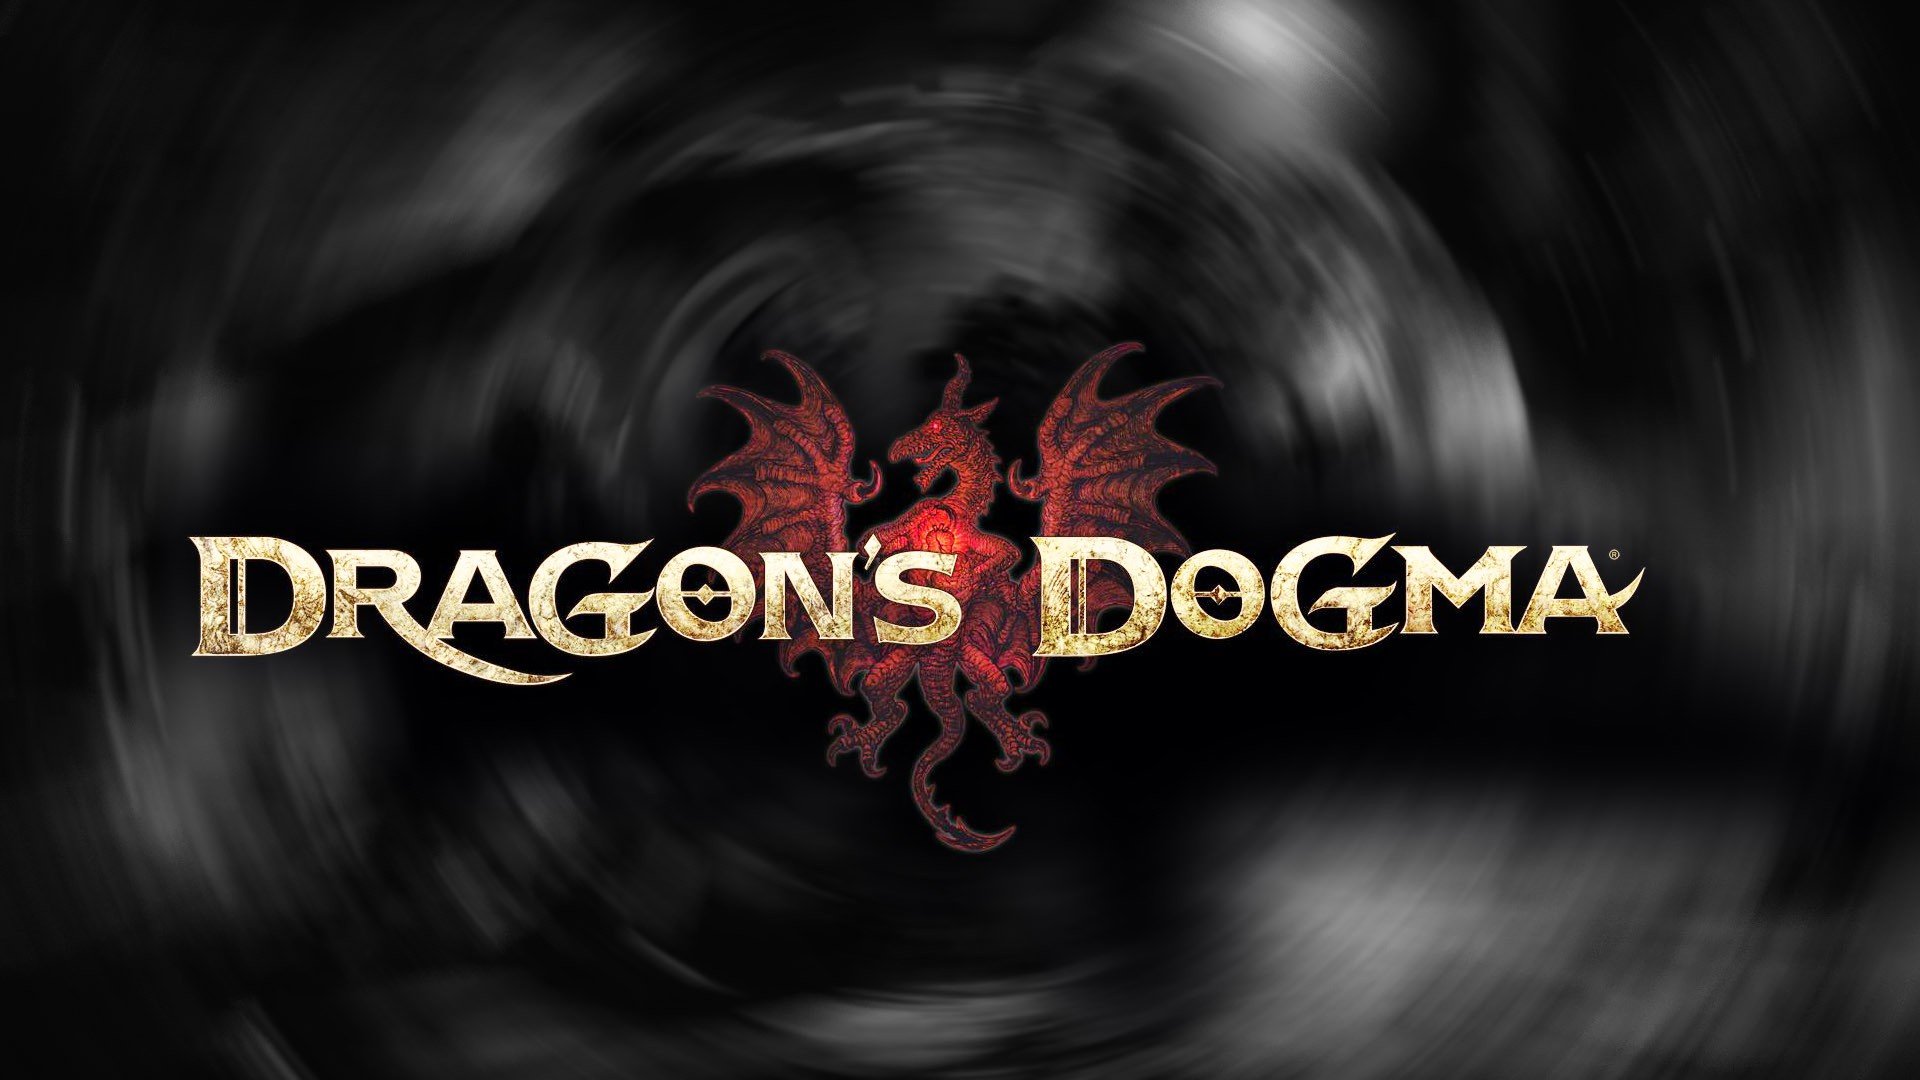 High resolution Dragon's Dogma: Dark Arisen hd 1920x1080 background ID:84209 for computer